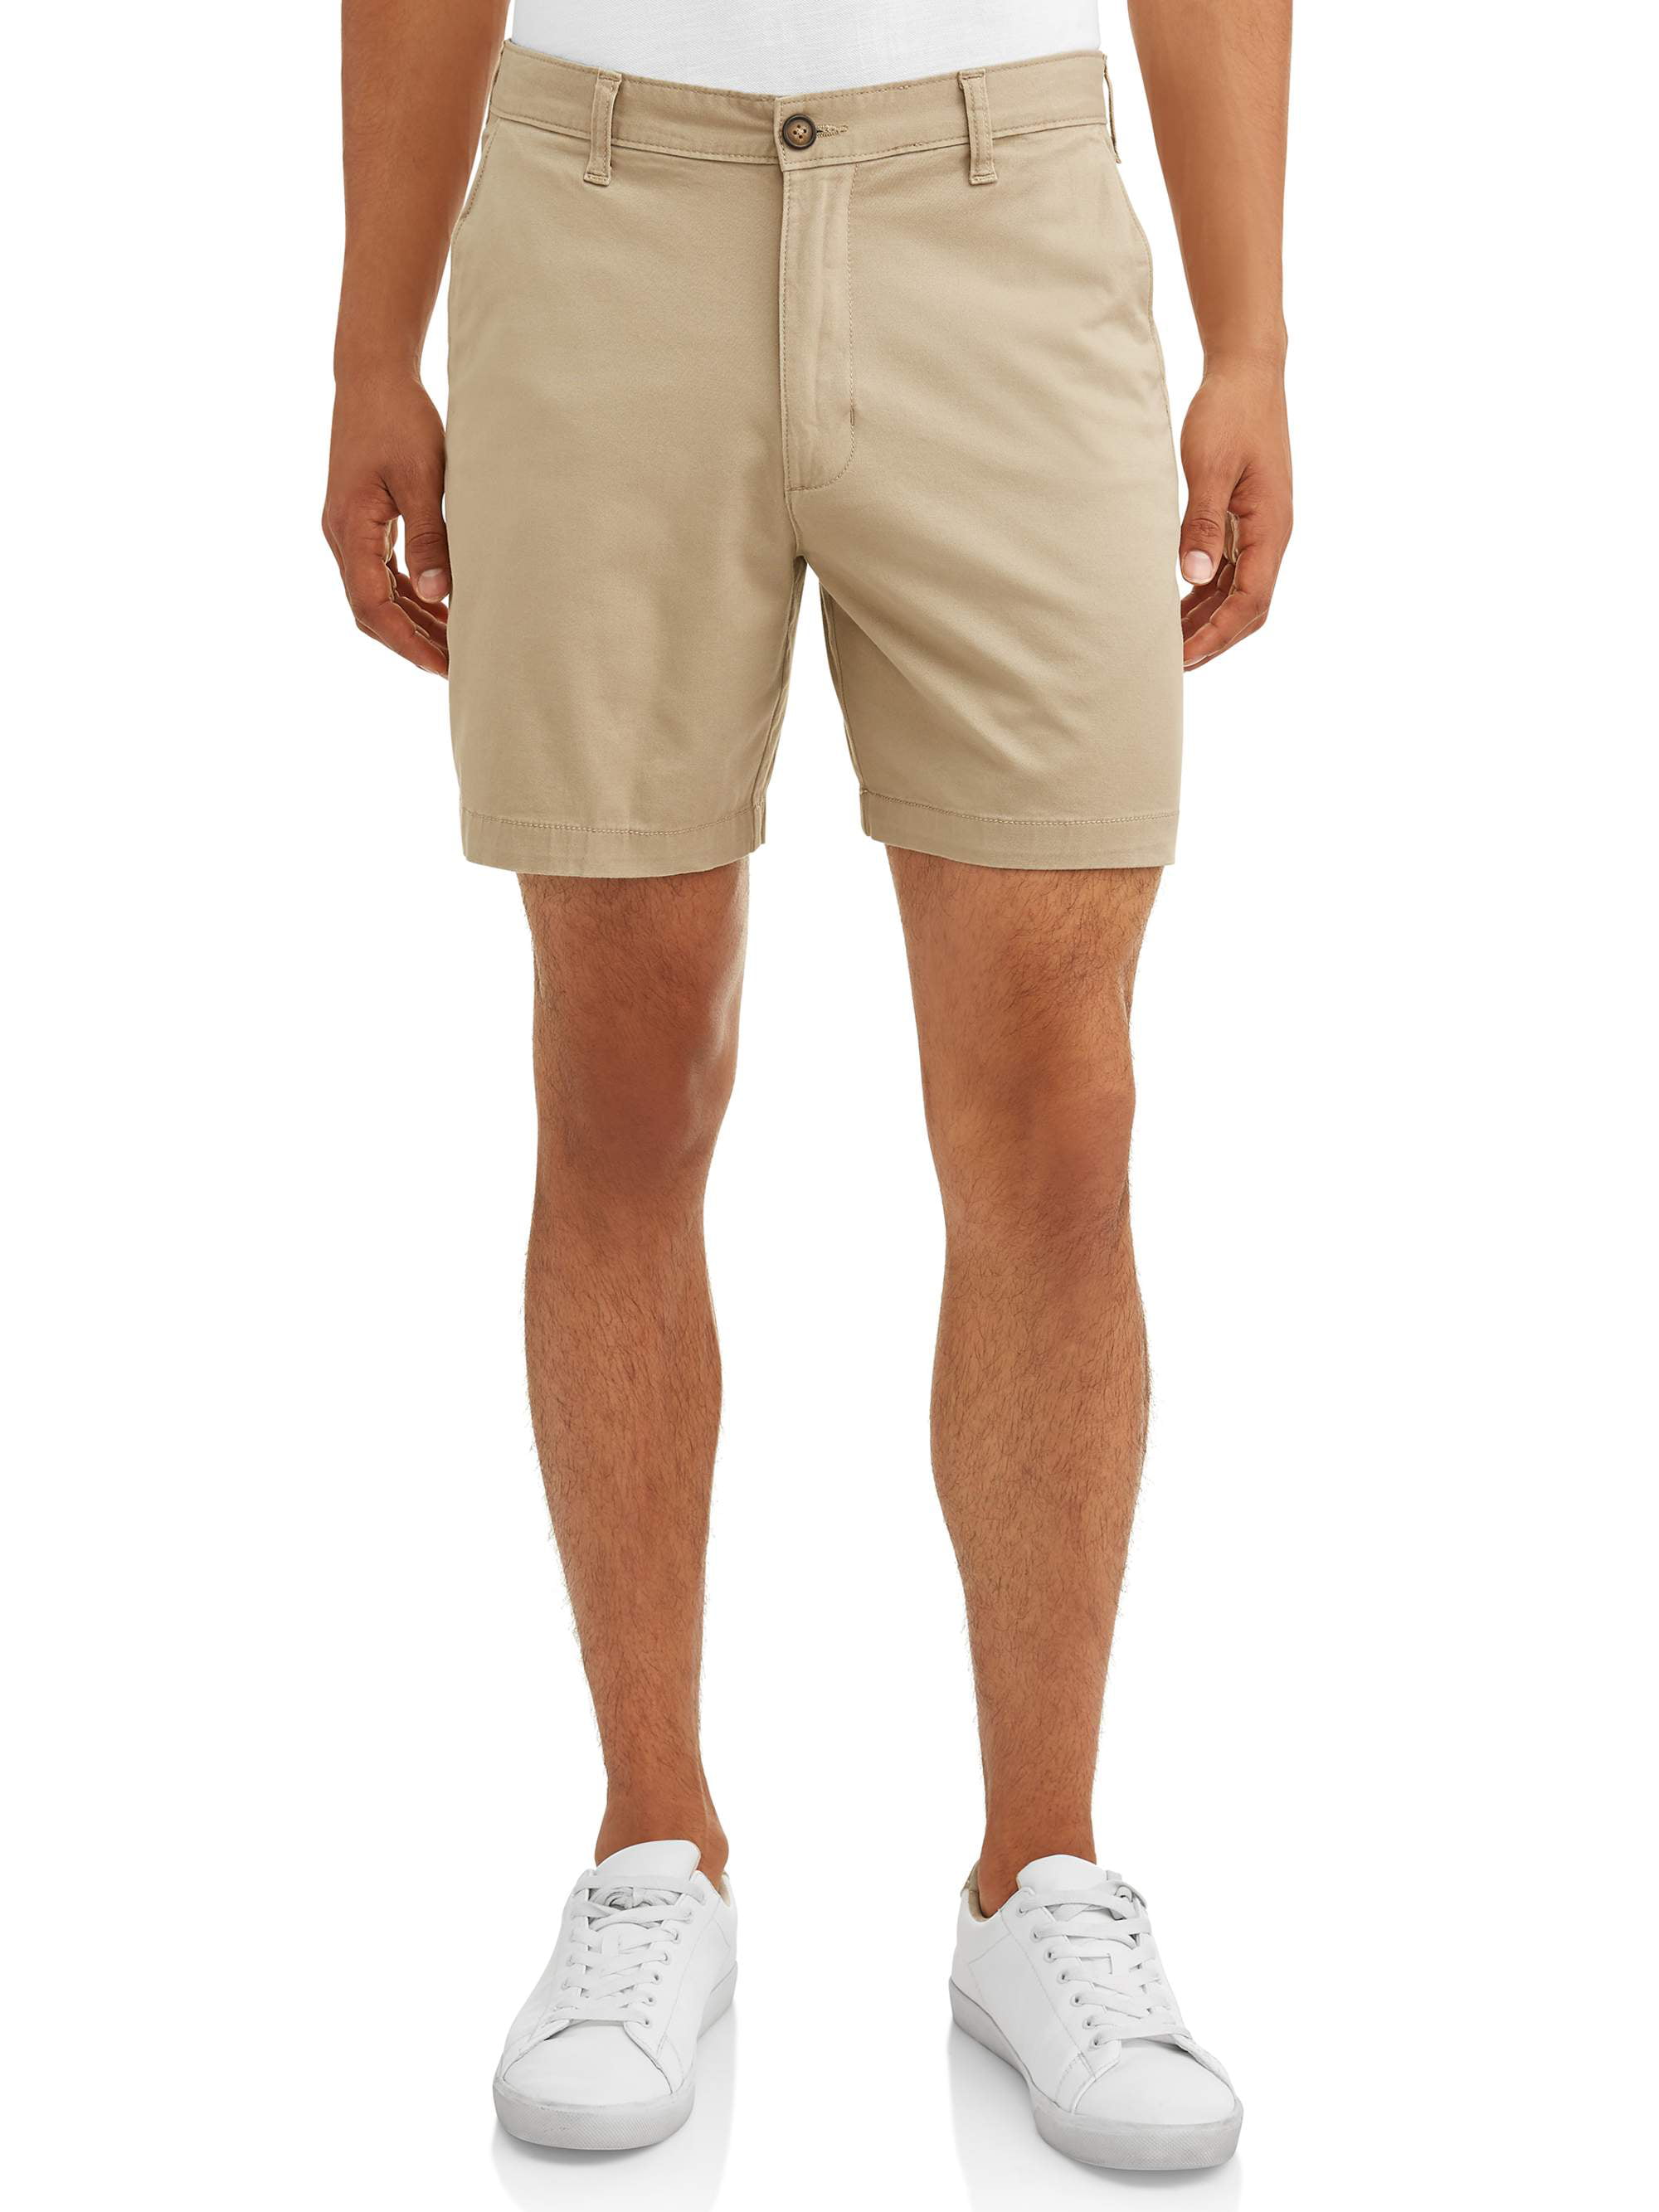 George Men's 7 in. Flat Front Shorts - Walmart.com